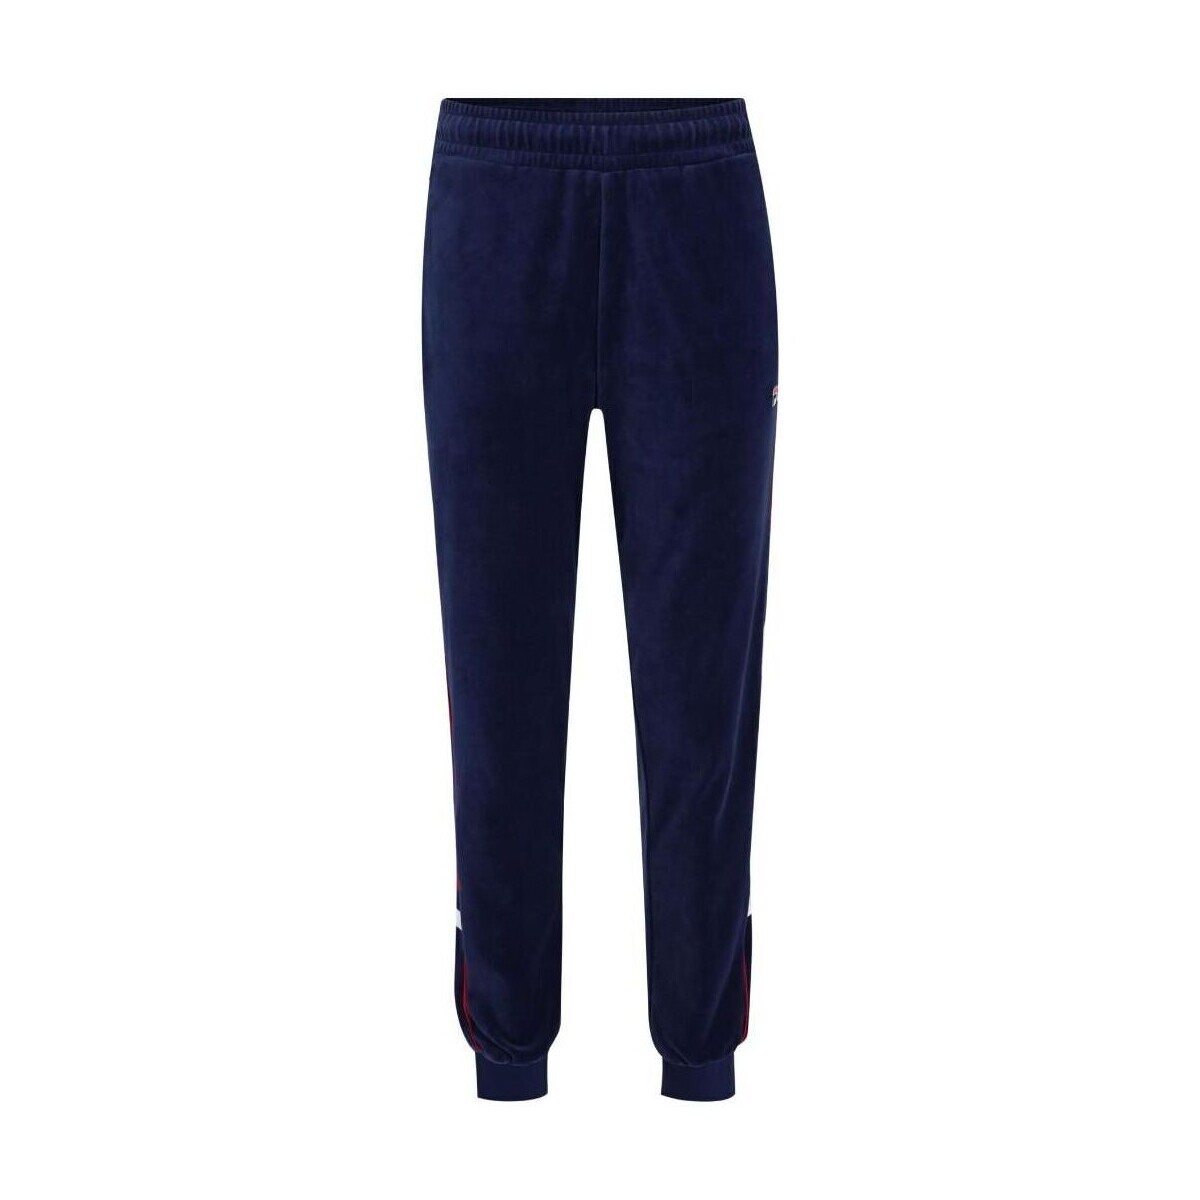 Vêtements Homme Pantalons Fila - fam0392 Bleu